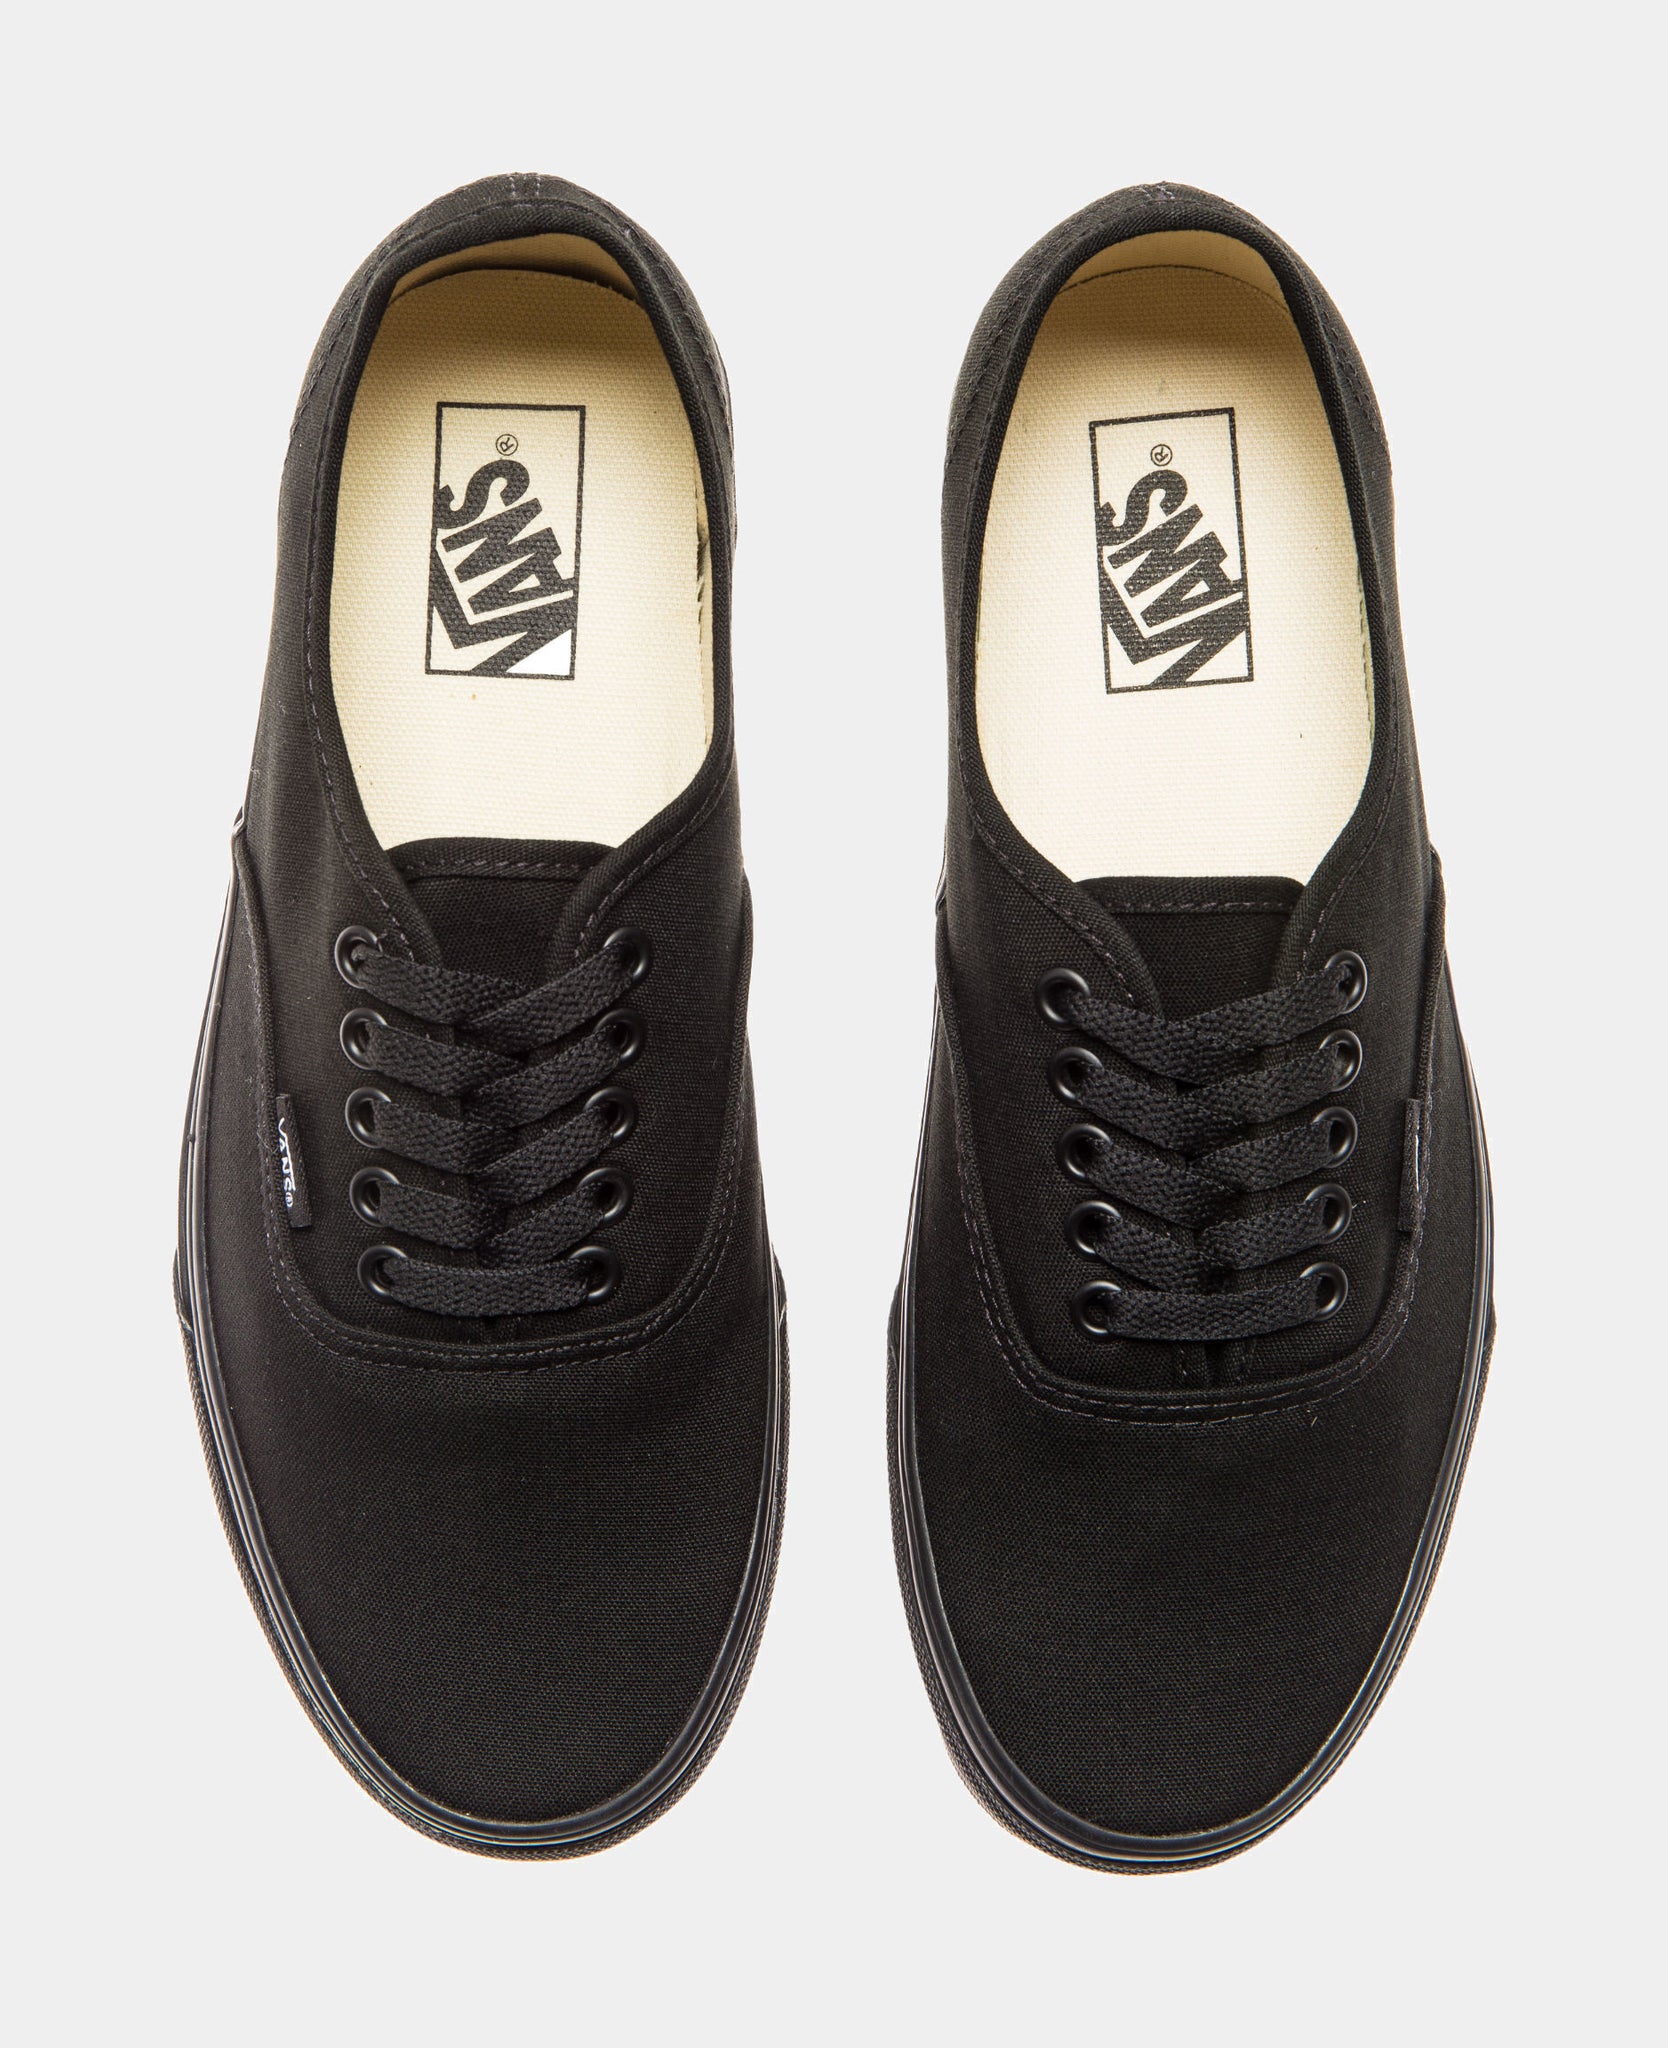 Vans Authentic Stackform Platform Sneakers, Black/true White | Sneakers |  Shoes | Shop The Exchange